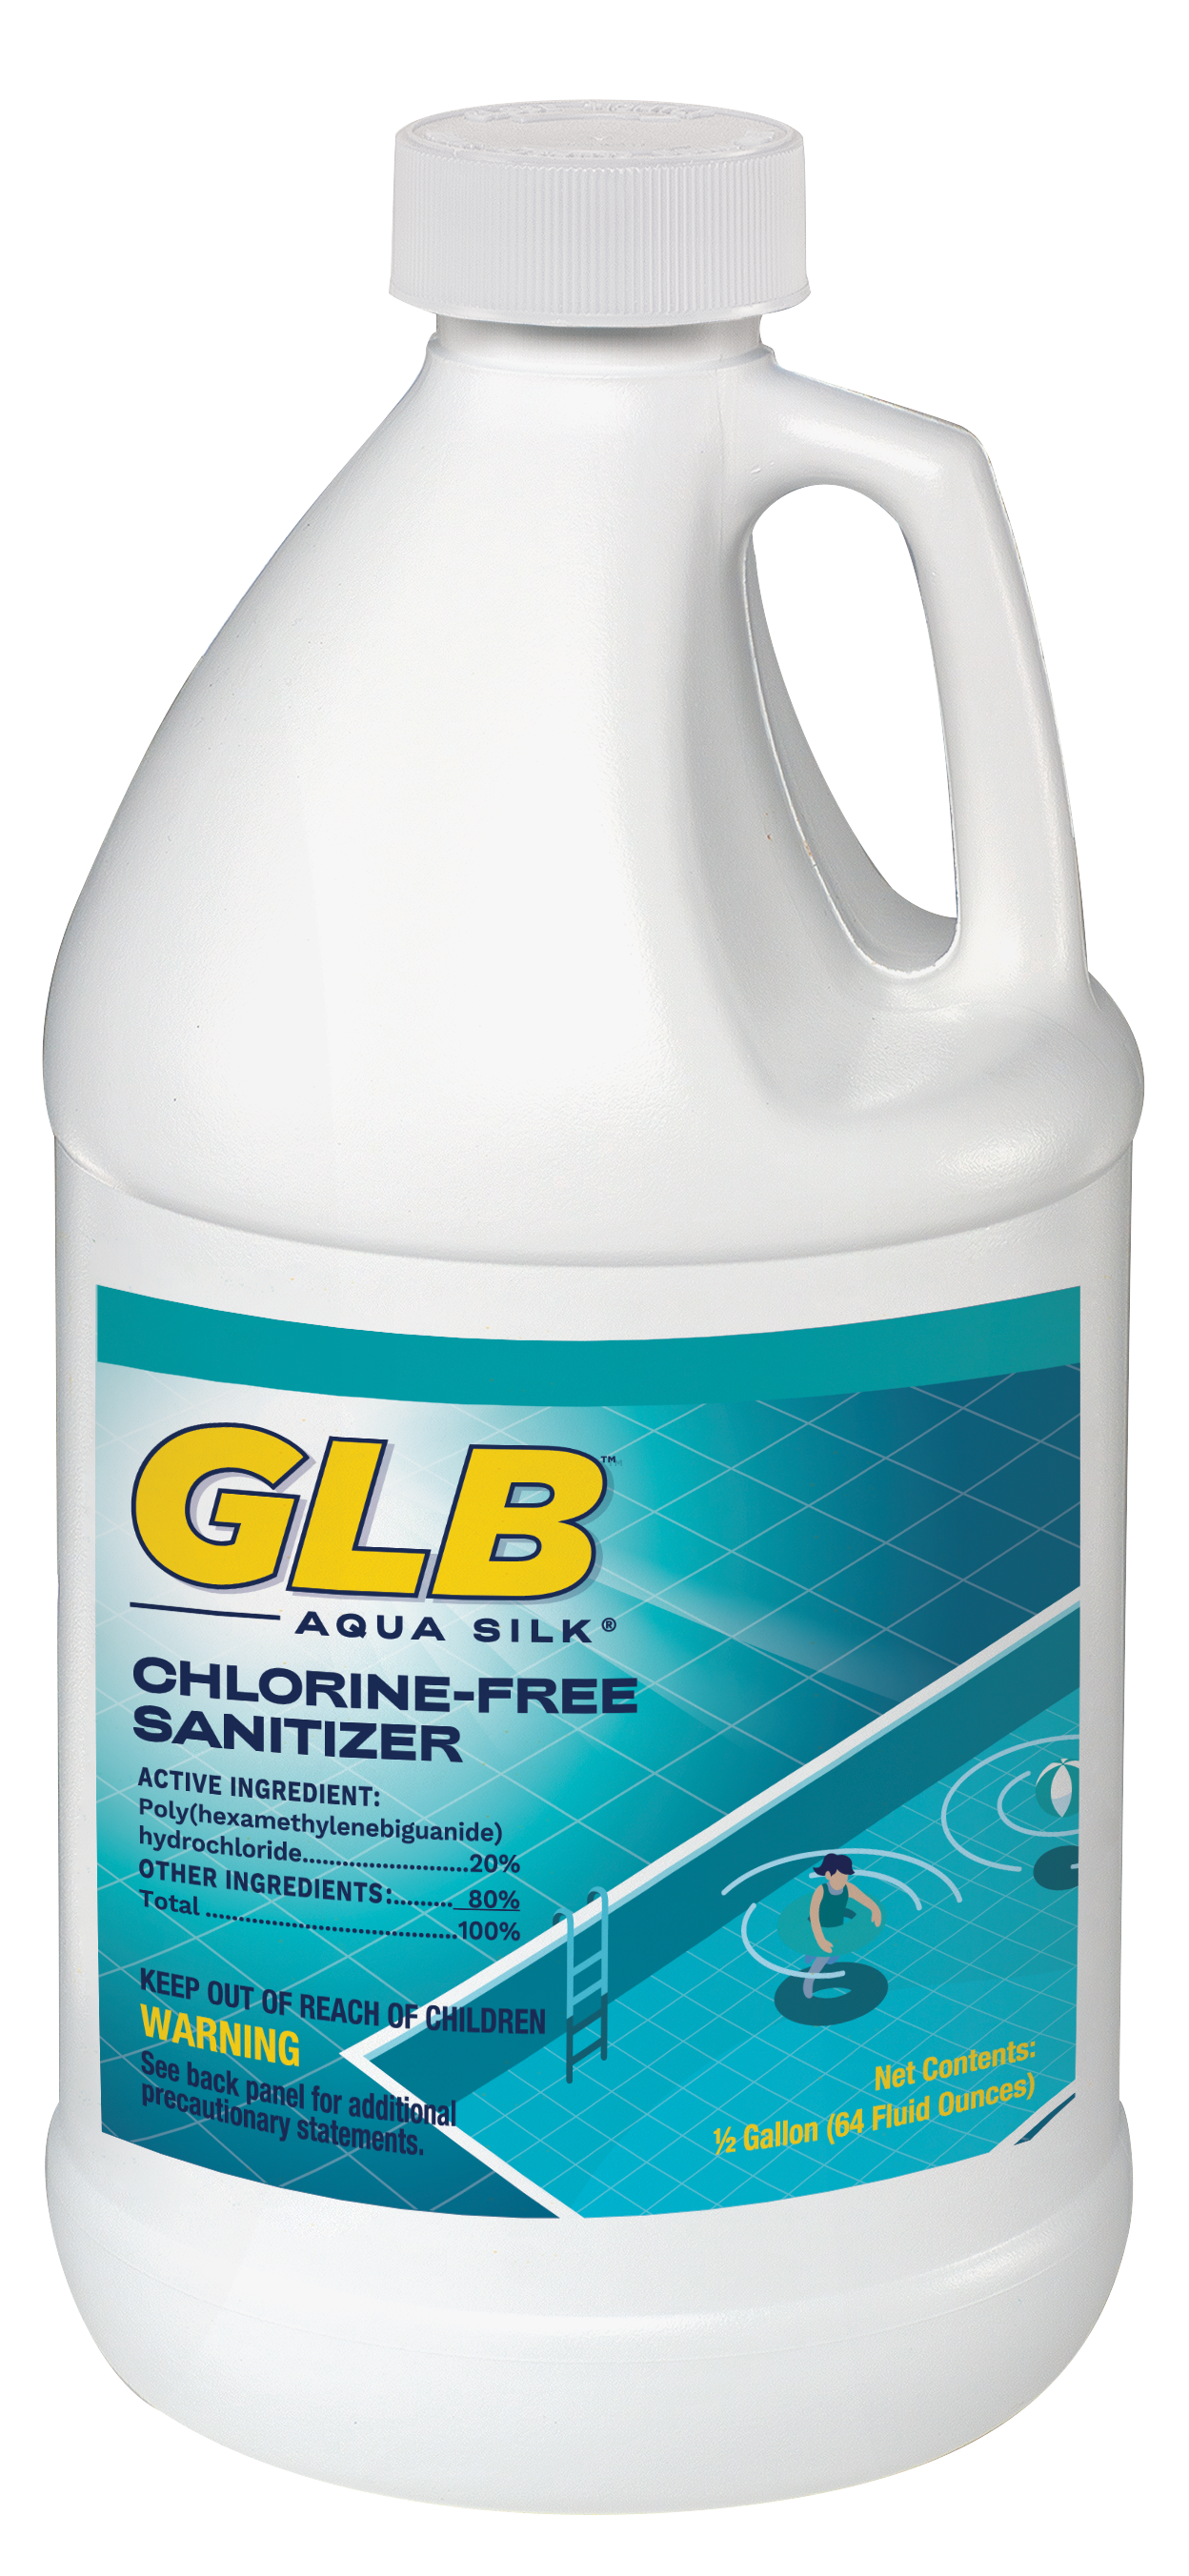 GLB Aqua Silk - Chlorine-Free Sanitizer - 1/2 Gallon - Item #71269